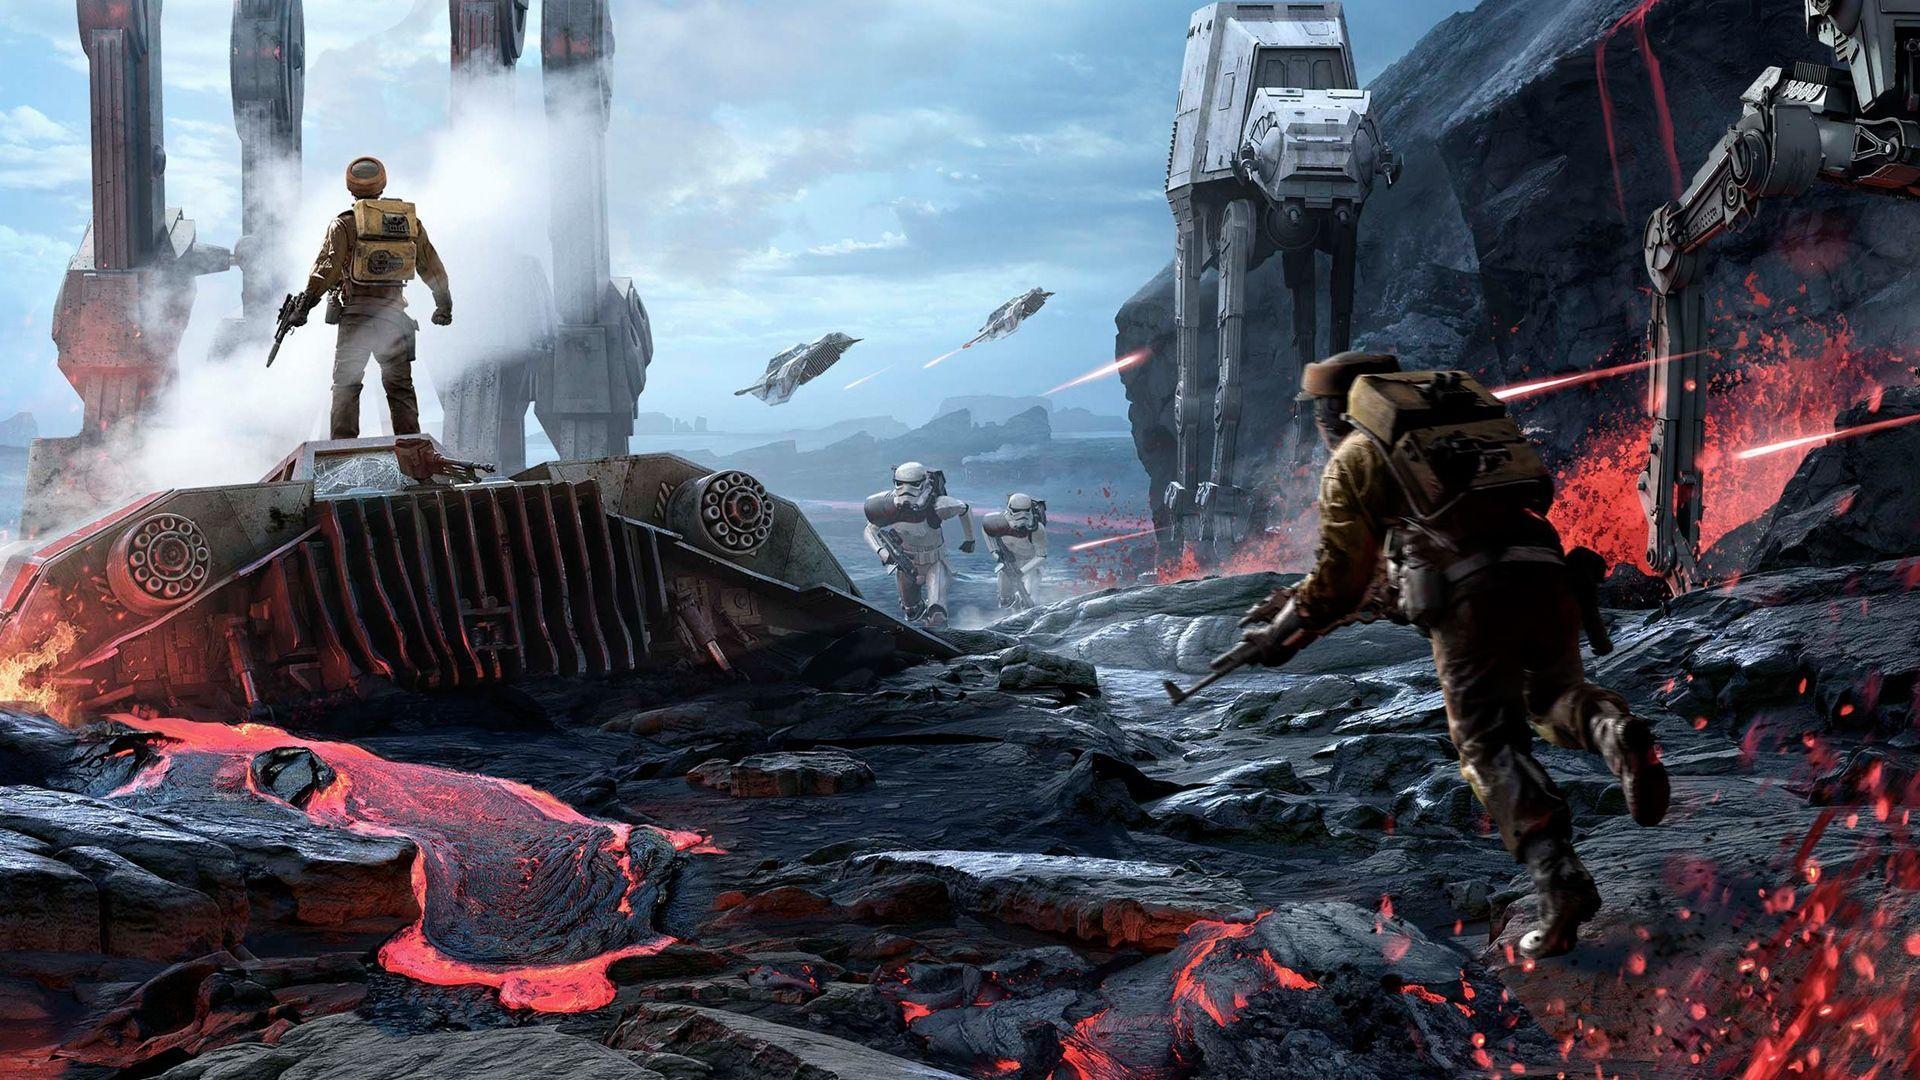 Star Wars Battlefront (2015) Wallpaper, Picture, Image